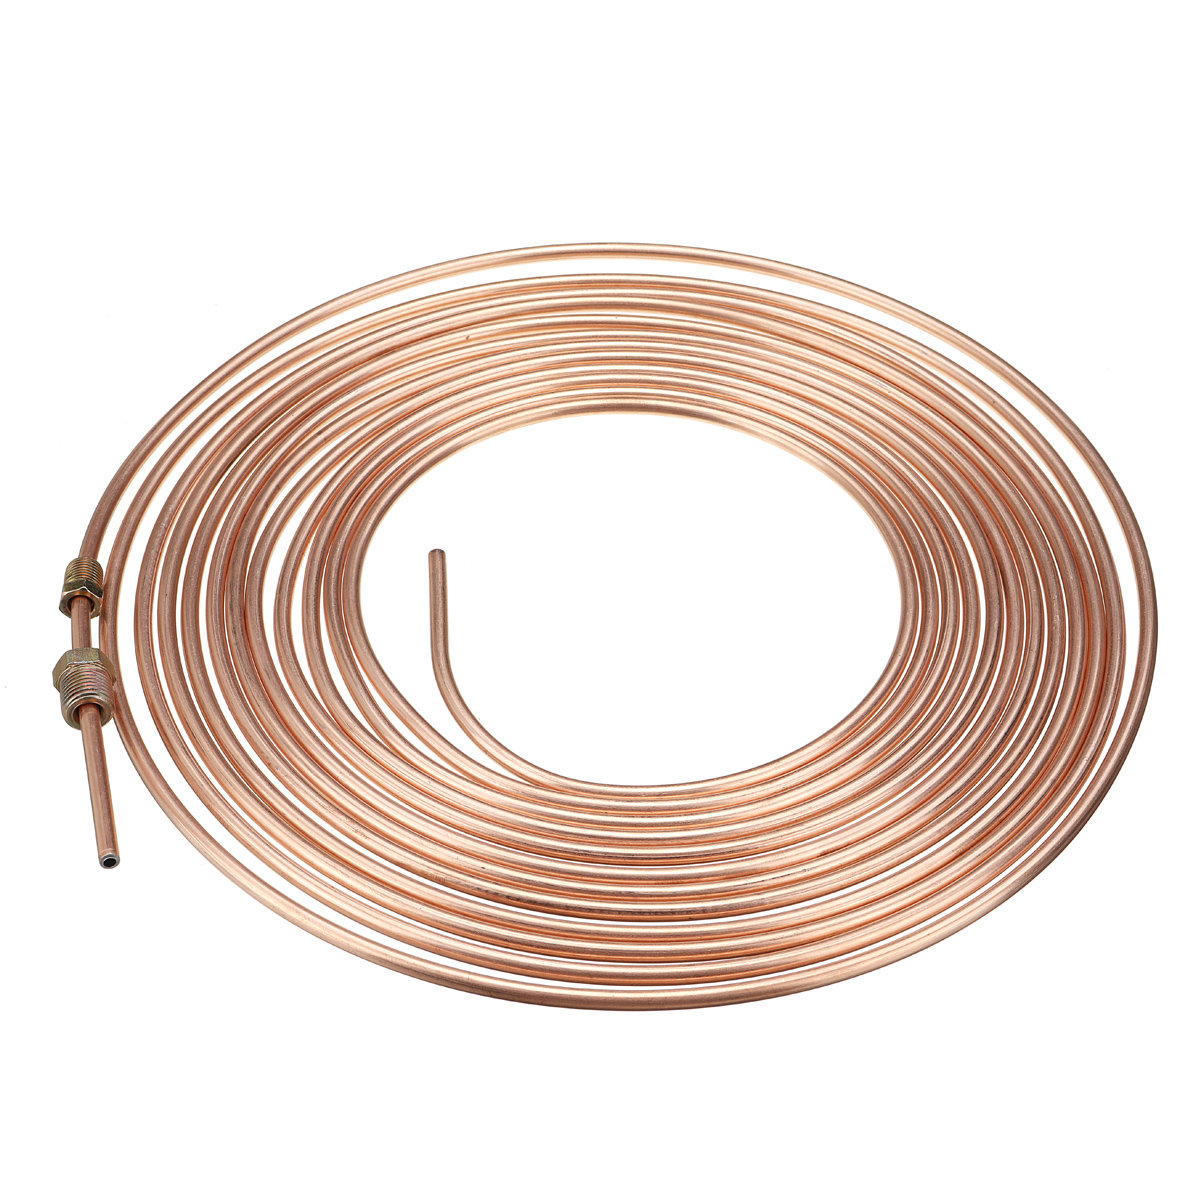 Universal 25ft copper nickel brake line tubing kit 3/16" od with 15pcs 3 16 Copper Nickel Brake Line Tubing